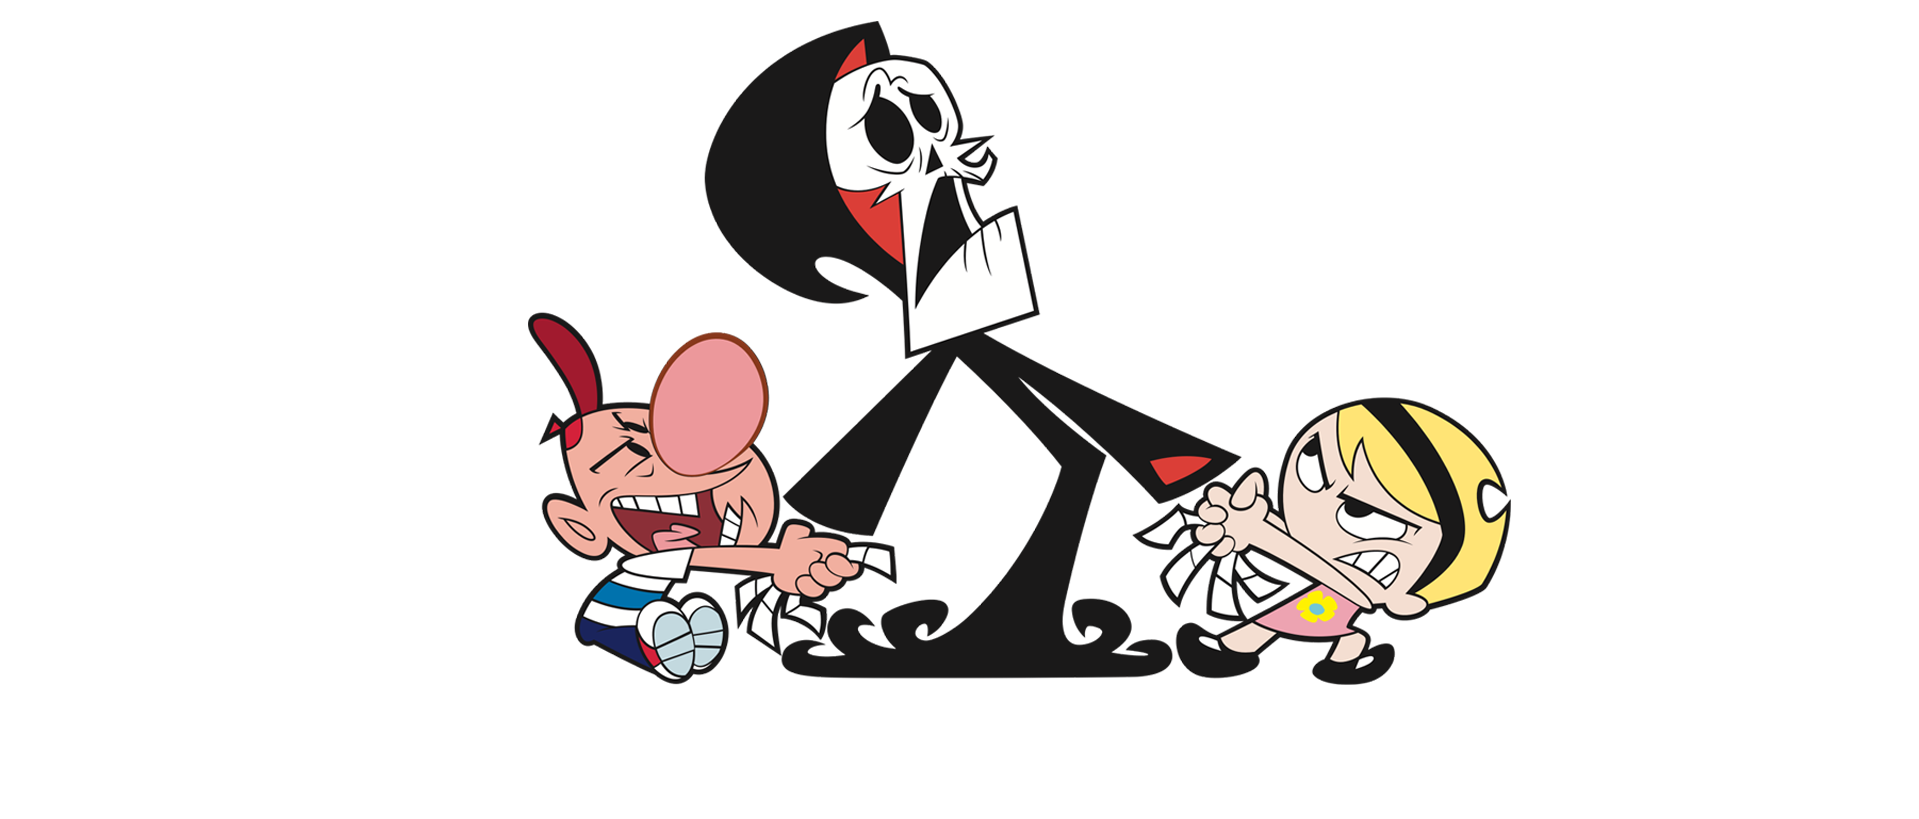 The Grim Adventures of Billy & Mandy | Games, Videos & Downloads |  Cartoon Network